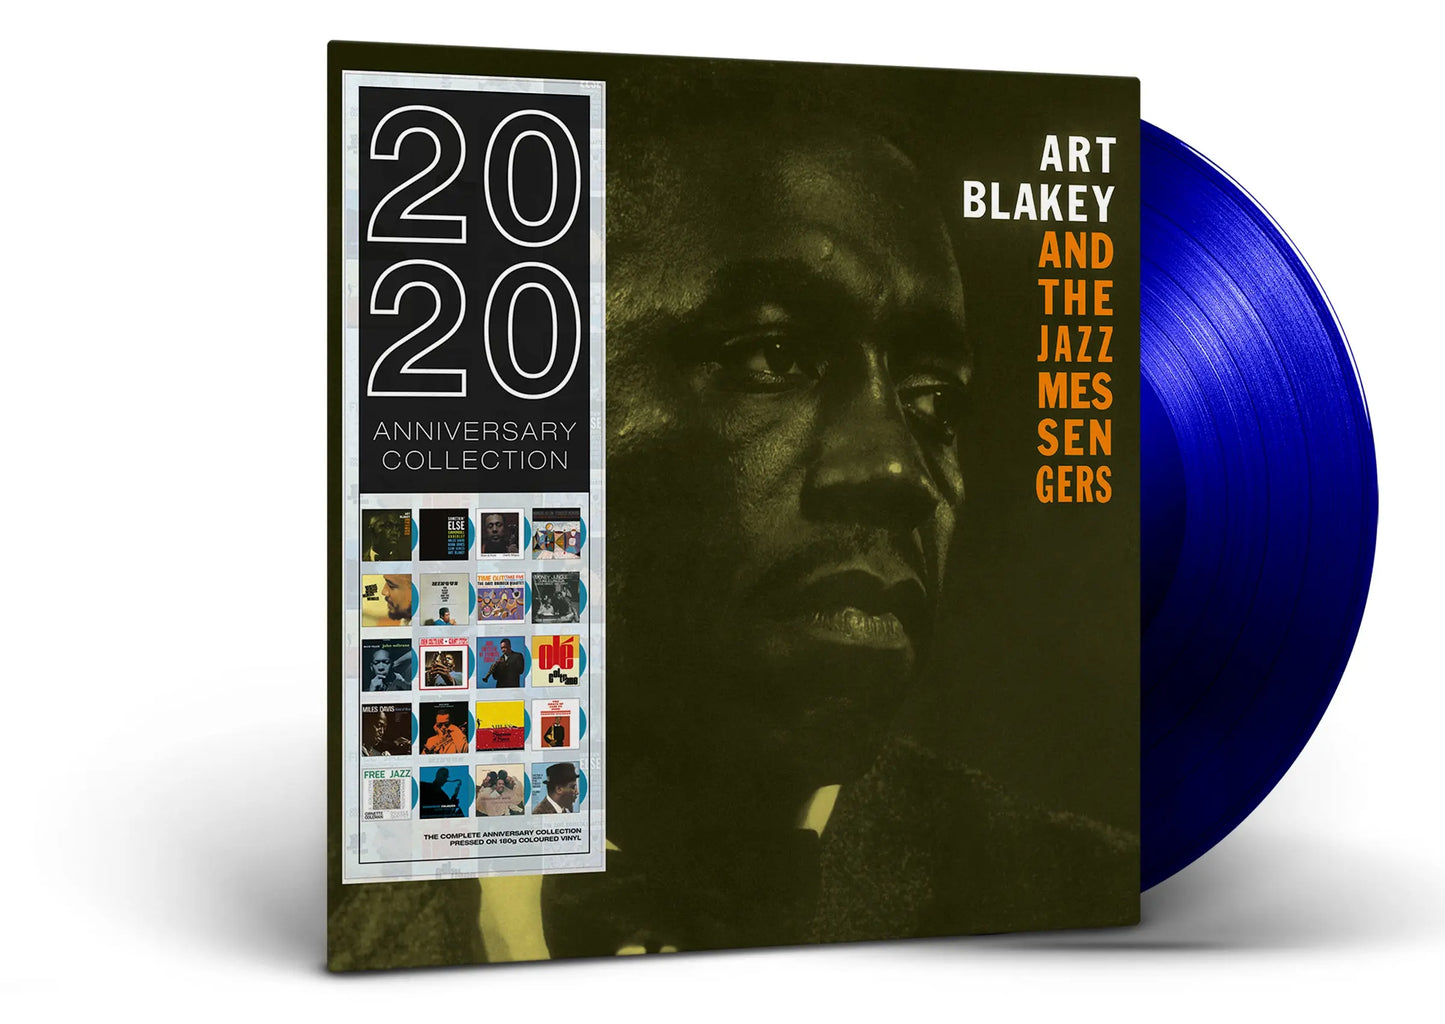 Art Blakey & The Jazz Messengers - Art Blakey & The Jazz Messengers [Blue Vinyl LP]